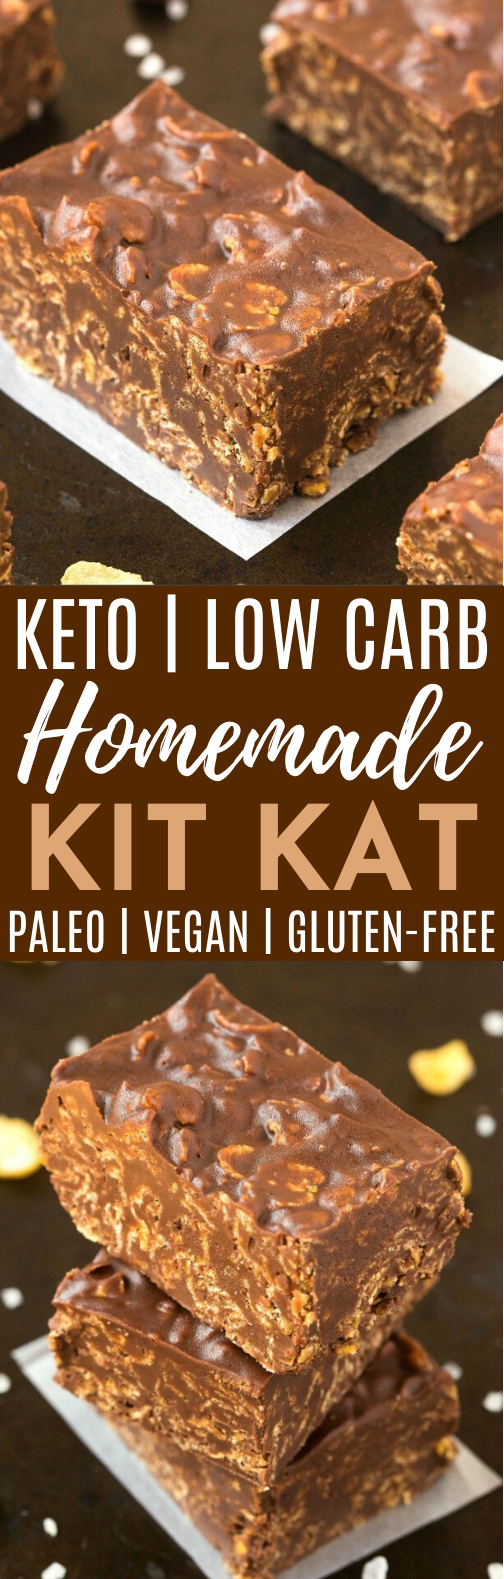 Homemade Keto Kit Kat Bars #healthy #snacks #keto #vegan #paleo